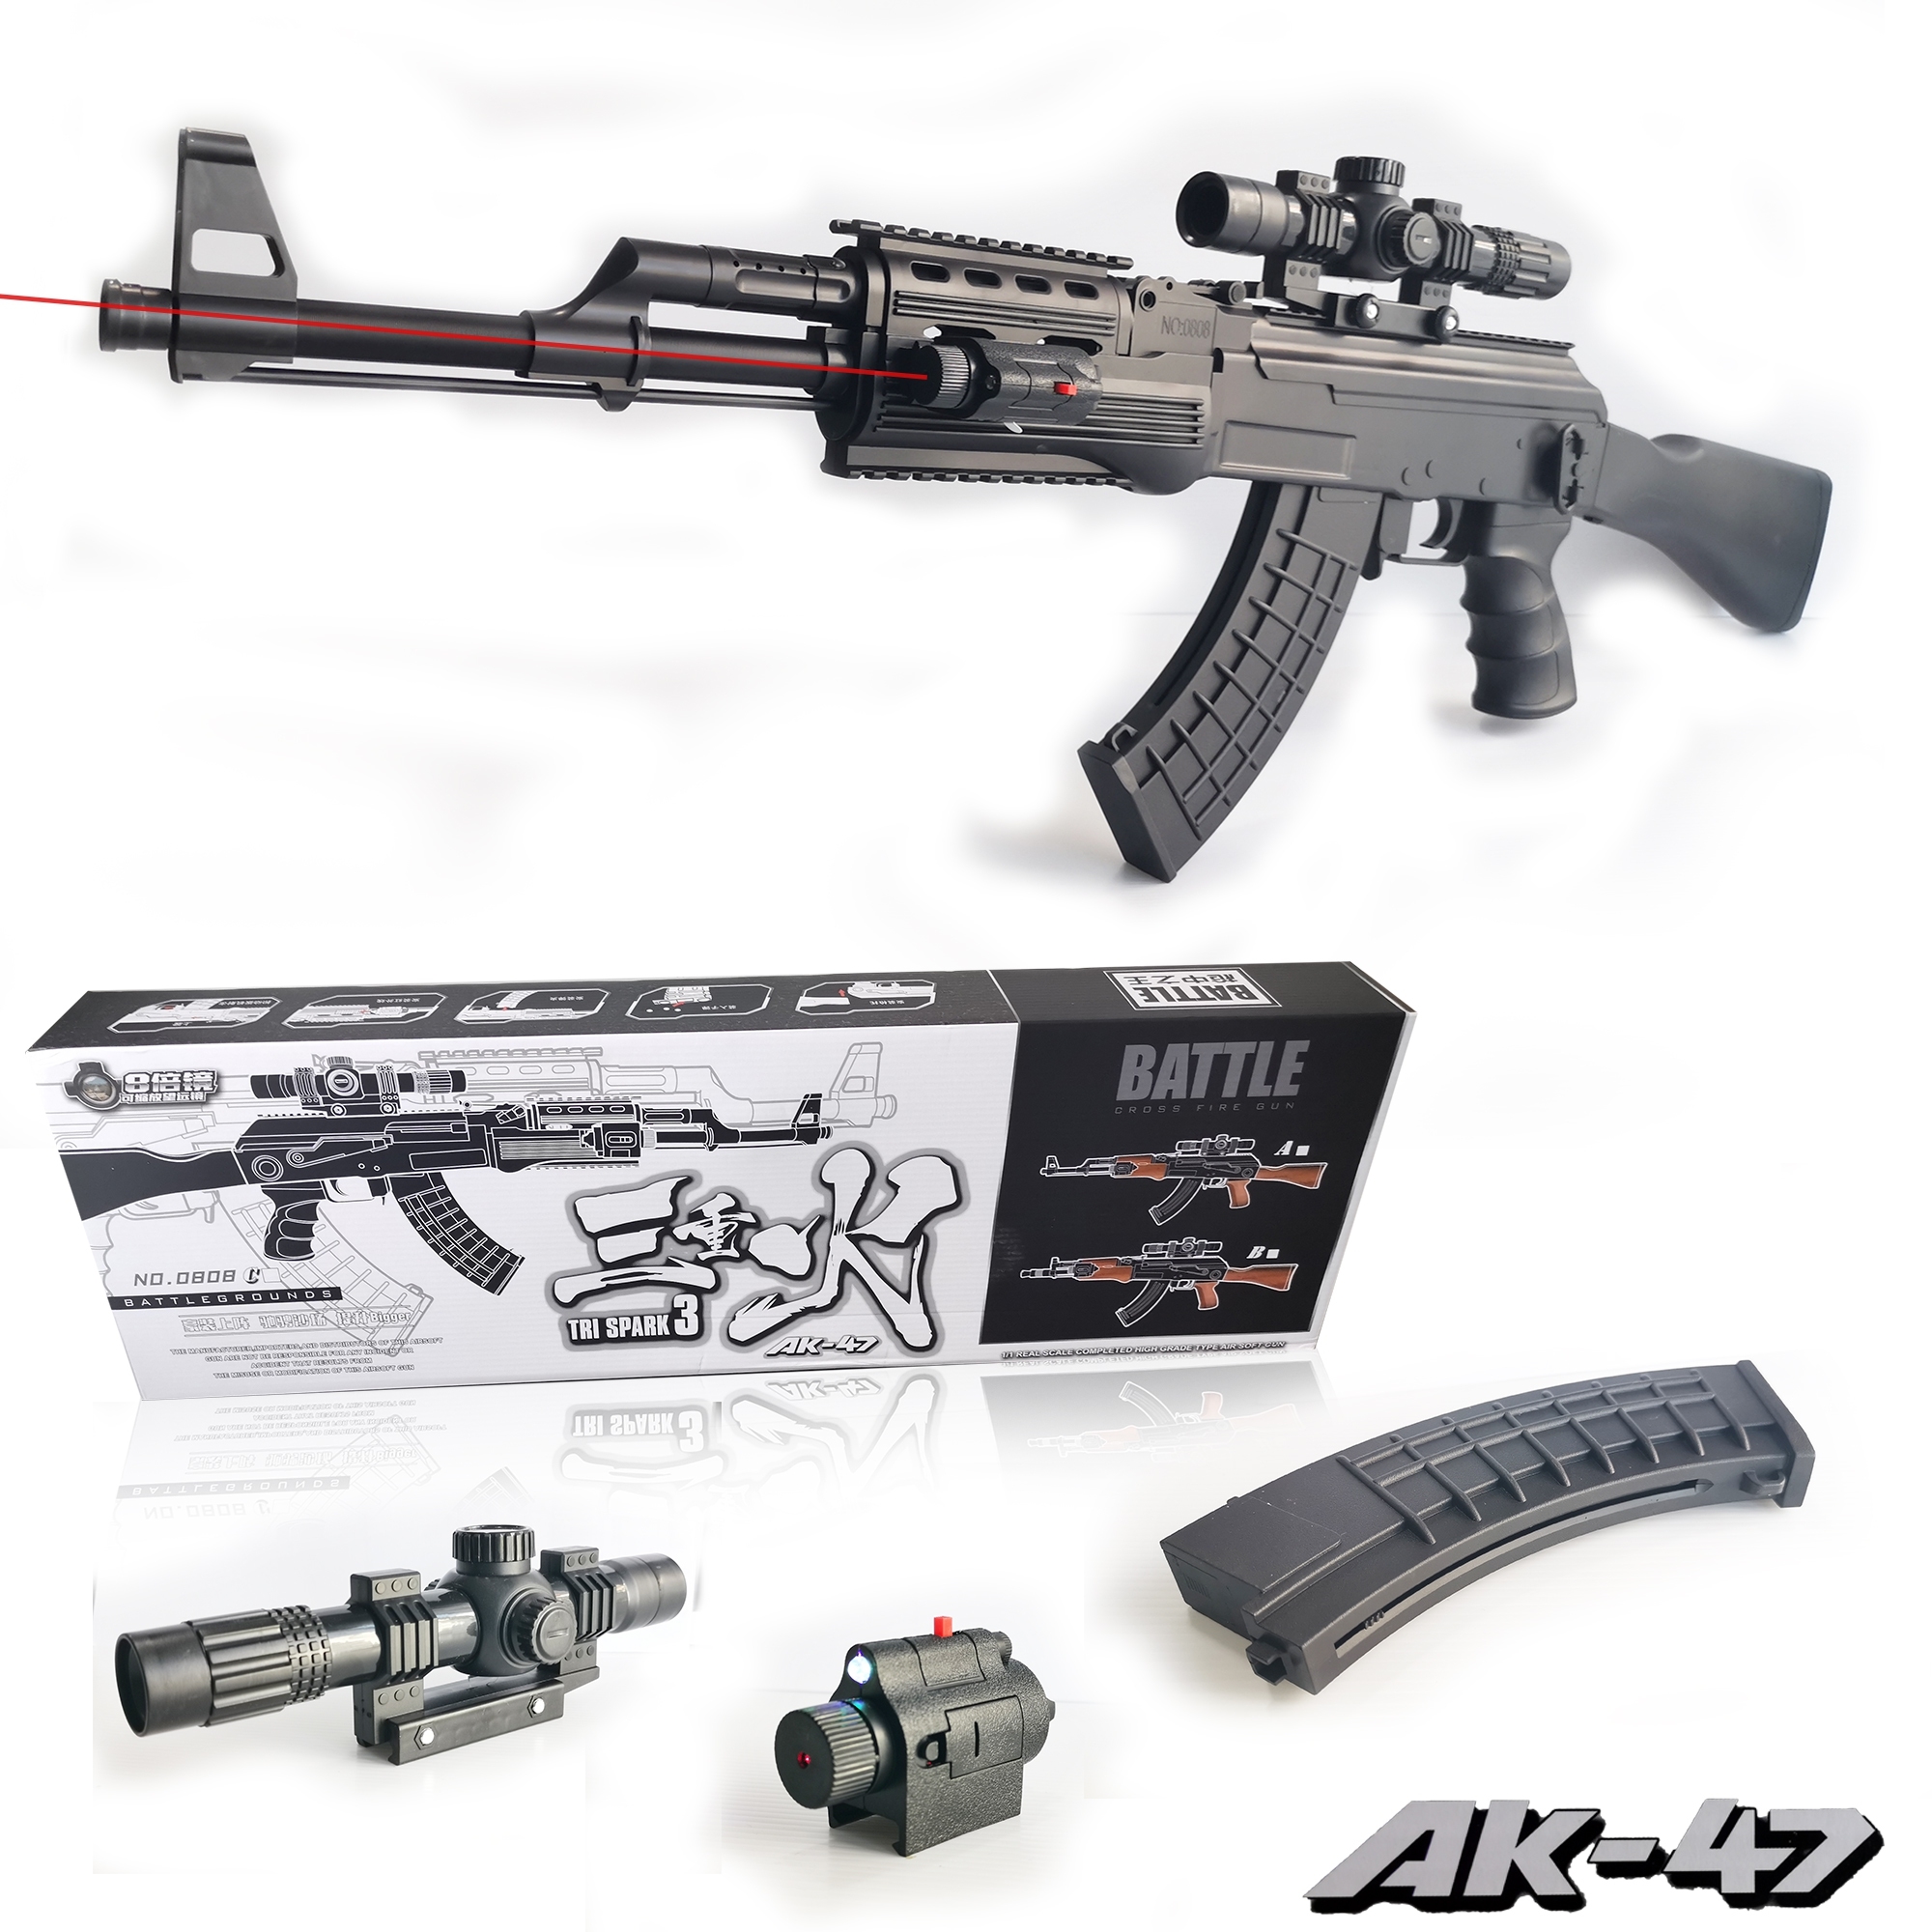 SP.TOYS ปืนของเล่นปืนอัดลม AK-47 ระบบสปริงชักยิงทีละนัด บอดีพลาสติกแข็ง ABS มาพร้อมสโคปปรับซูมได้